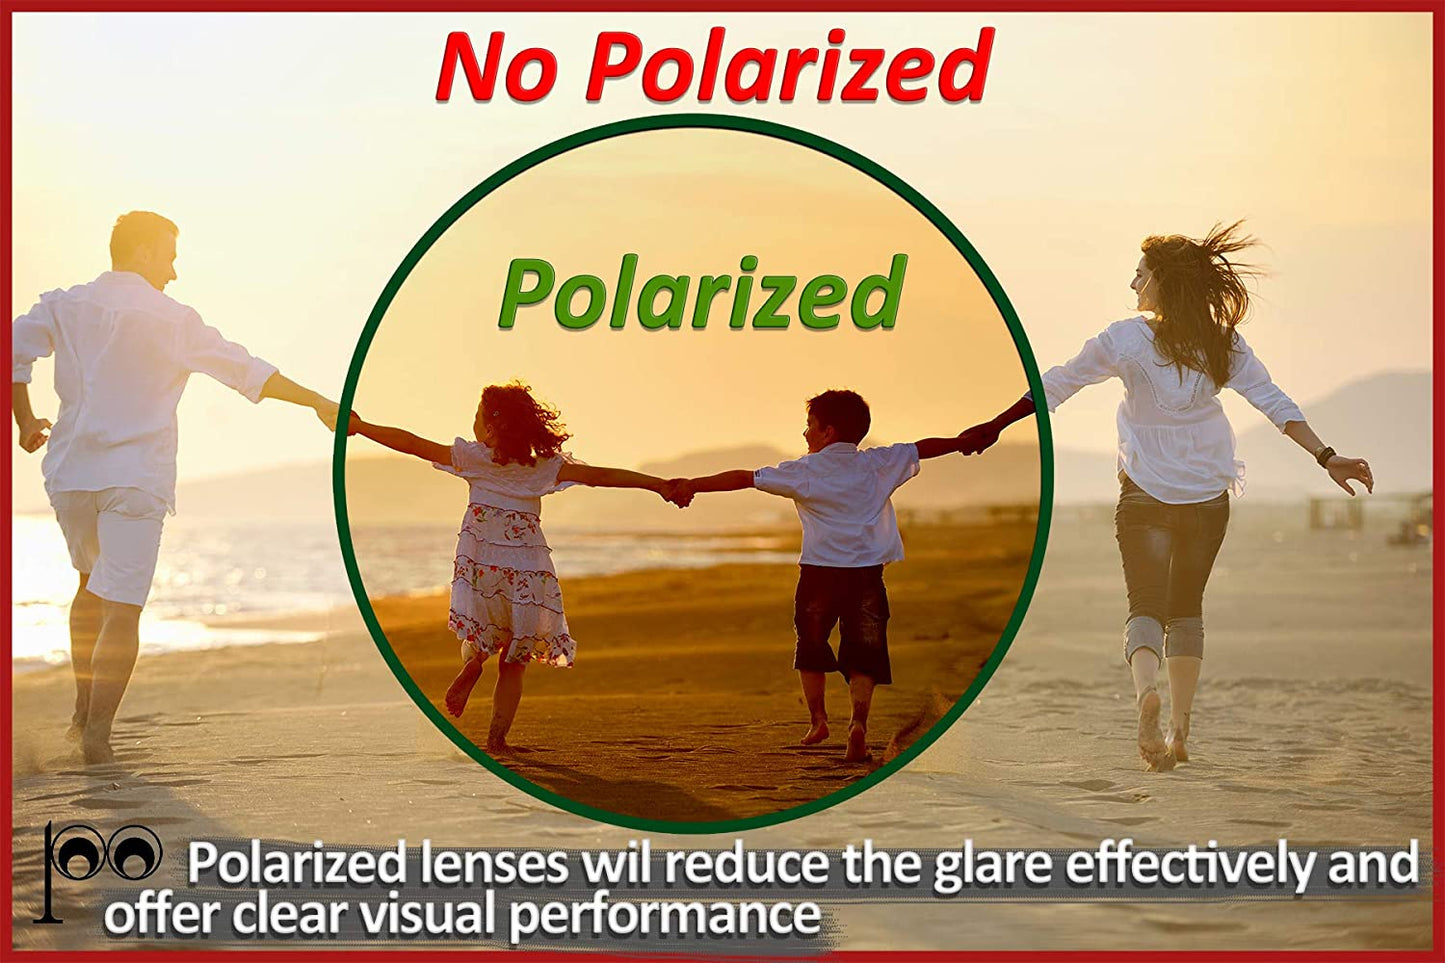 Prizo Polarized Replacement Lenses for Oakley Batwolf Sunglasses (Jade Iridium)